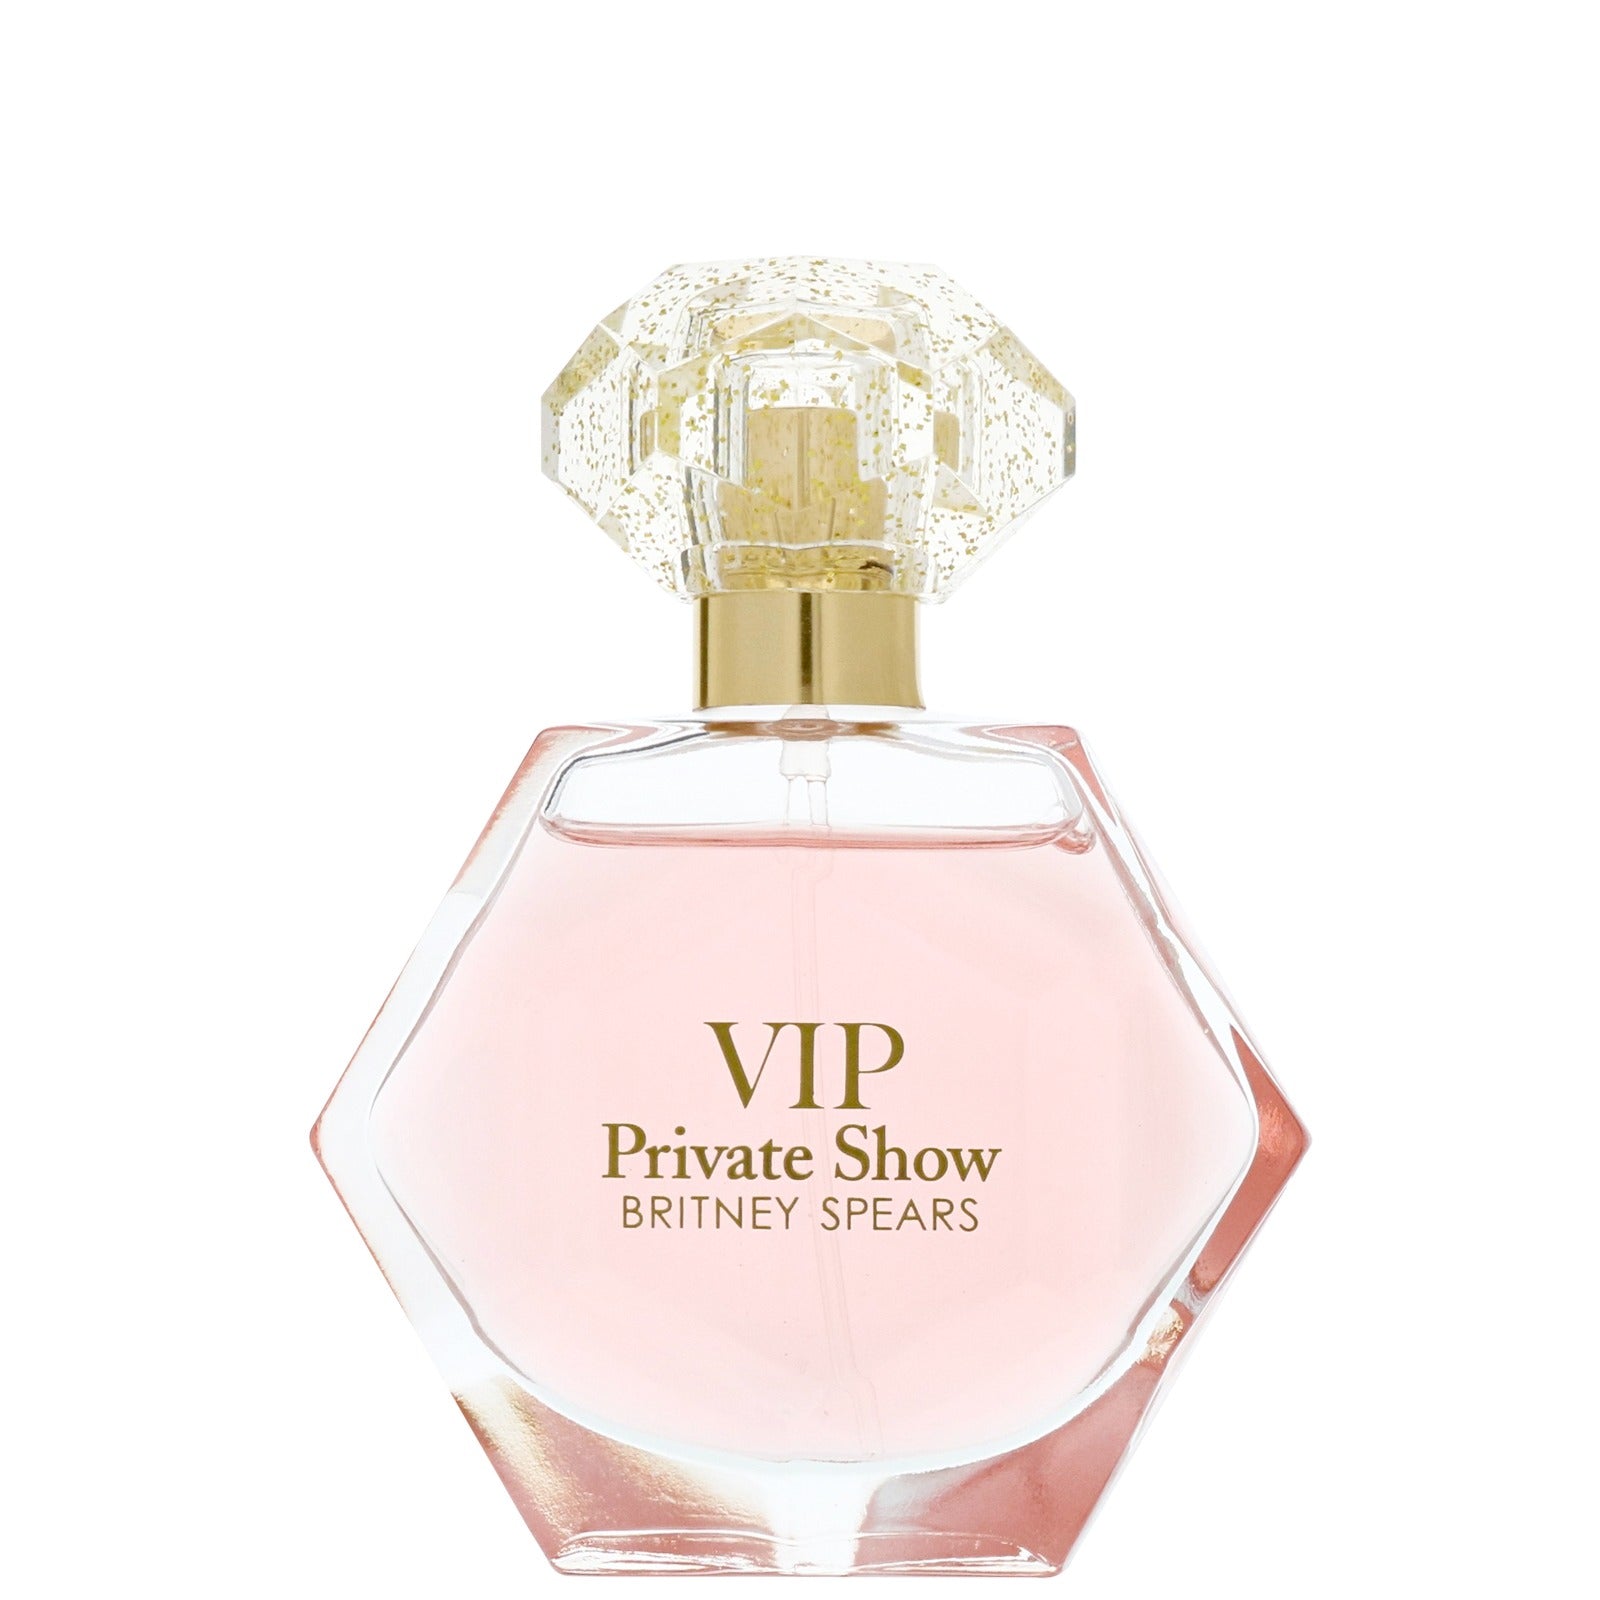 Britney Spears Private Show VIP Eau de Parfum 30ml Spray